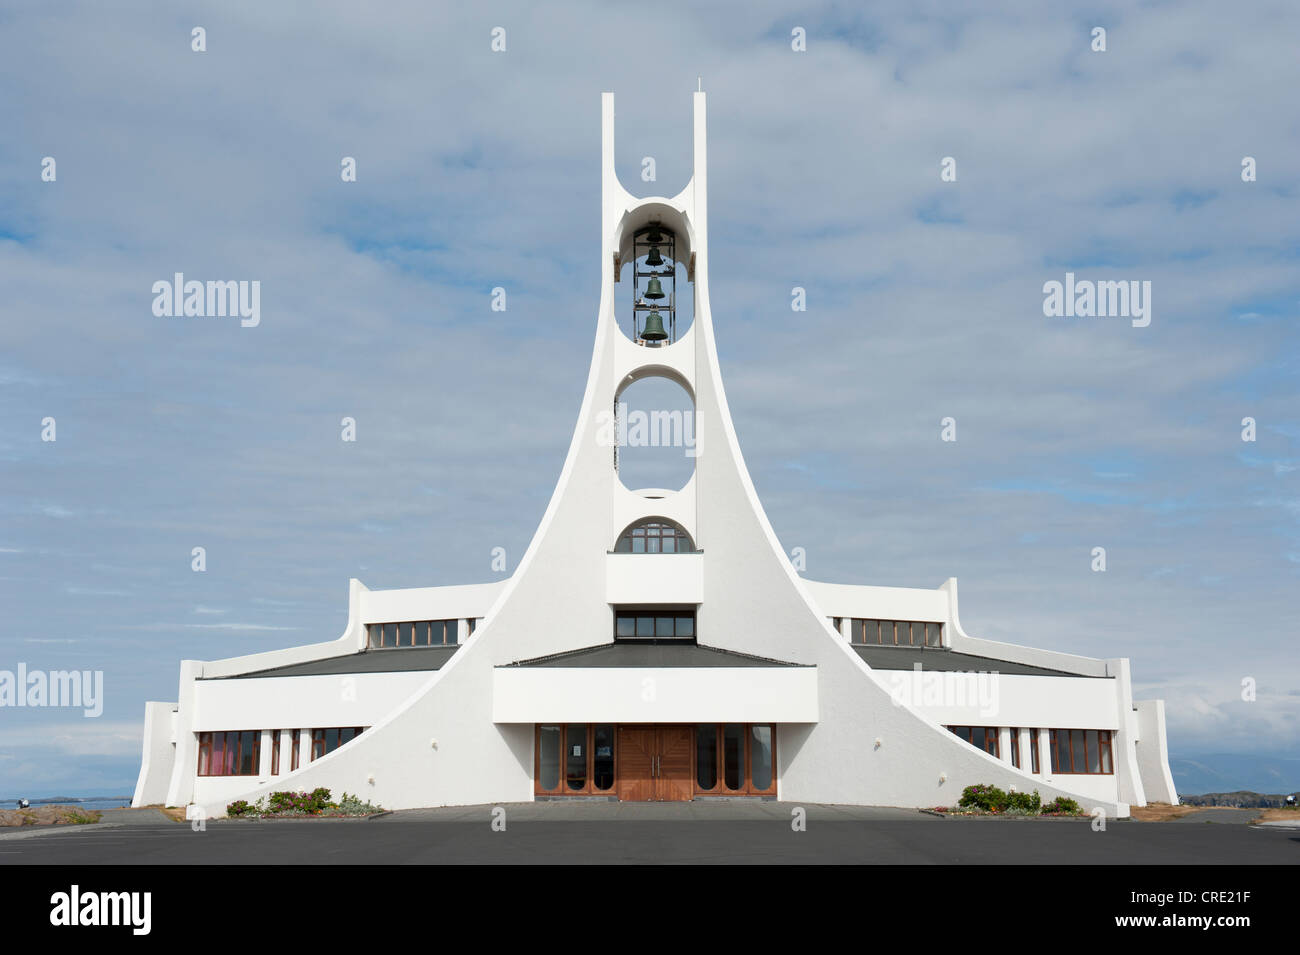 Moderne weiße Kirche, Betonbau, Stykkishólmur, Island Skandinavien Nordeuropa, Europa Stockfoto